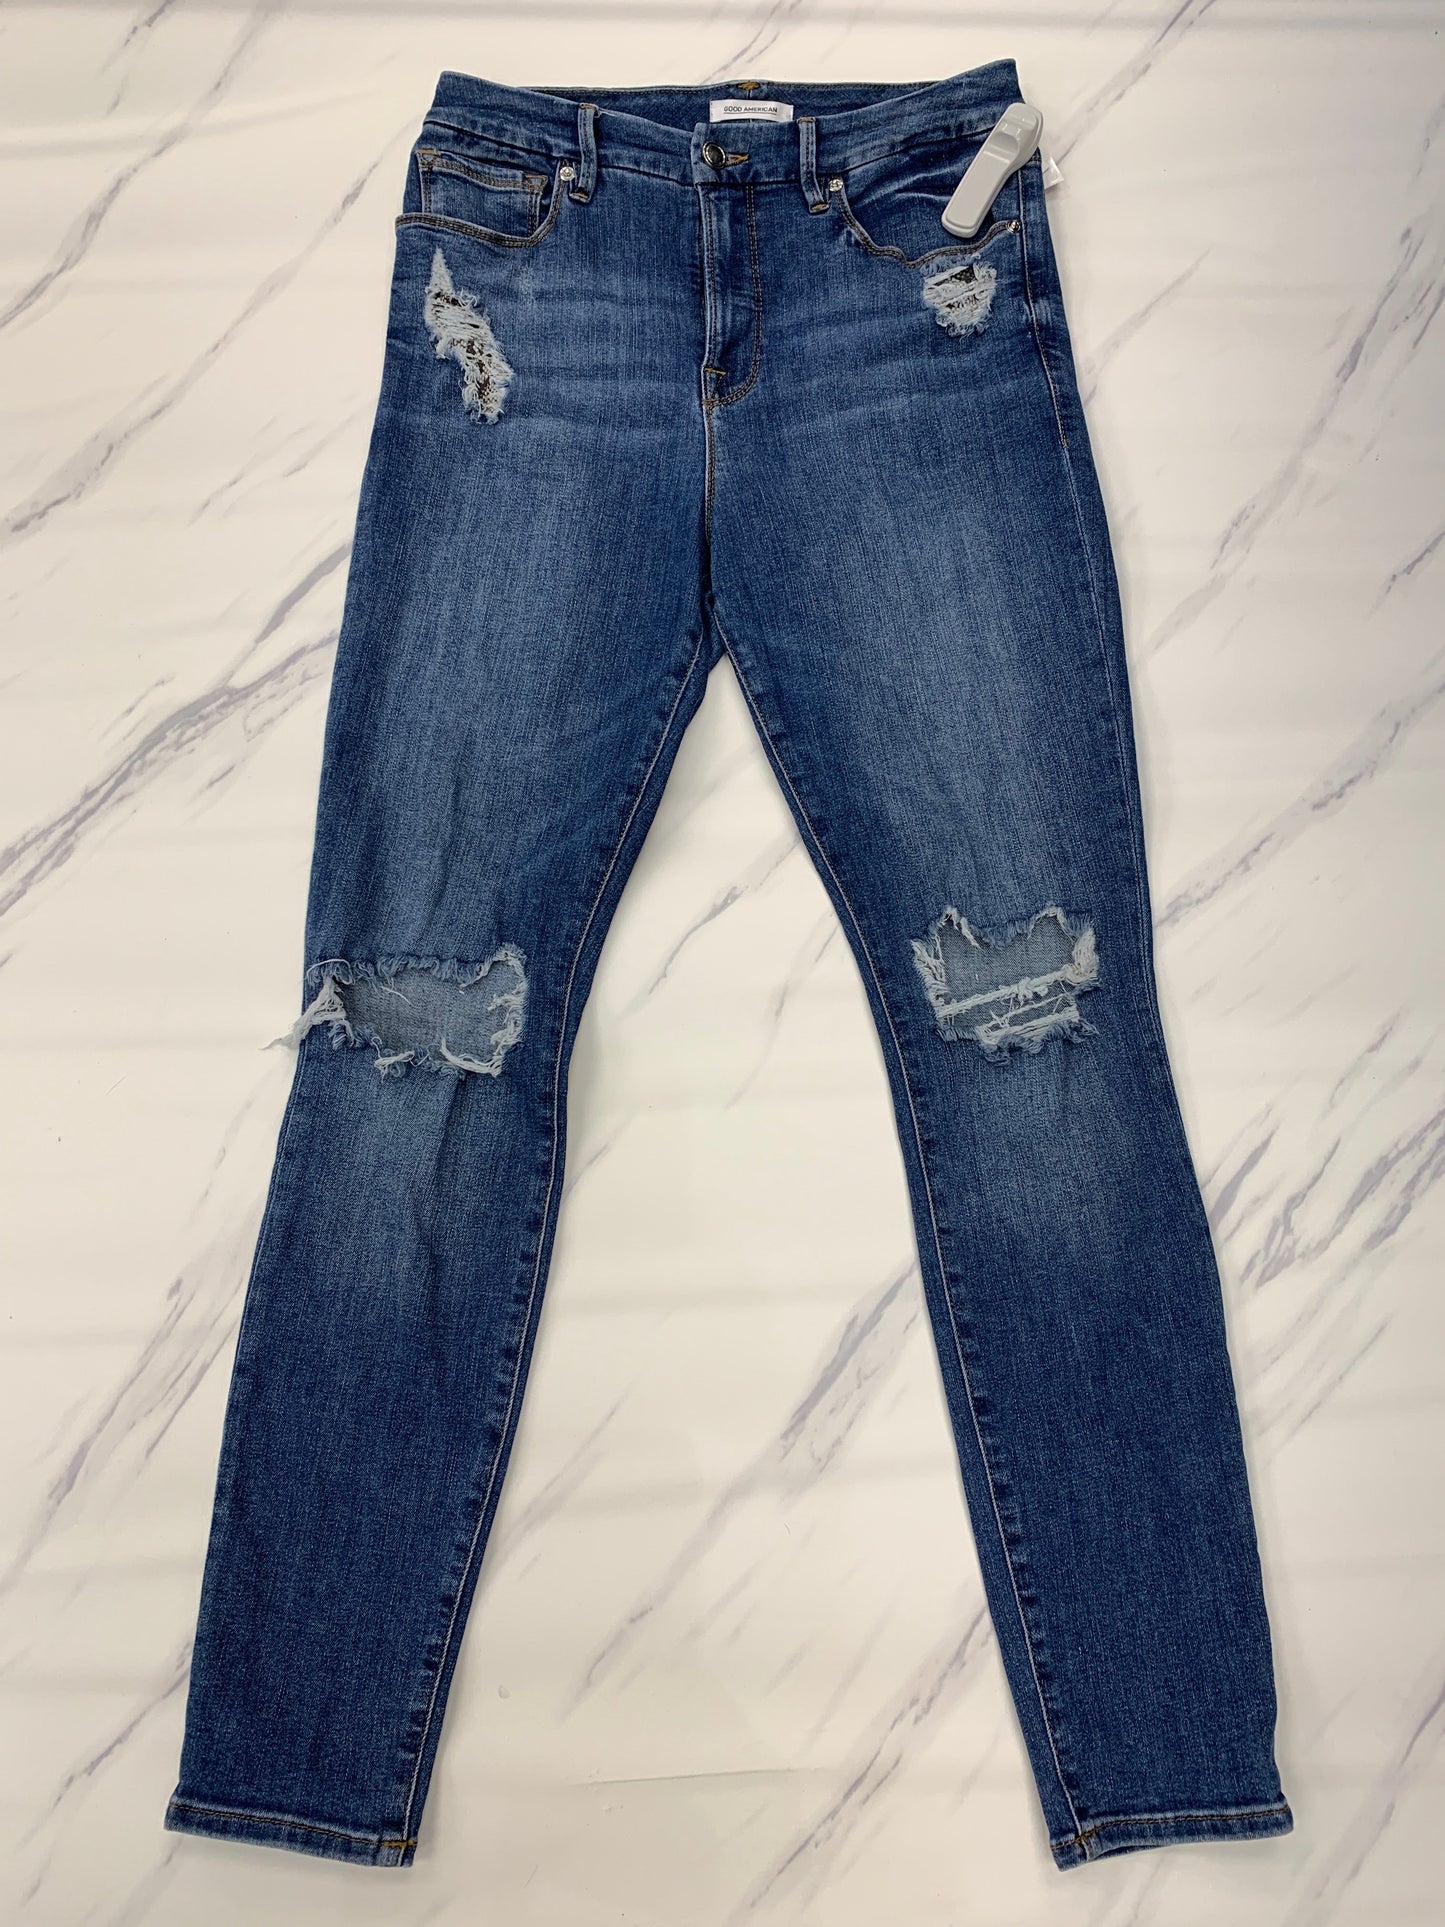 Jeans Designer Good American, Size 8